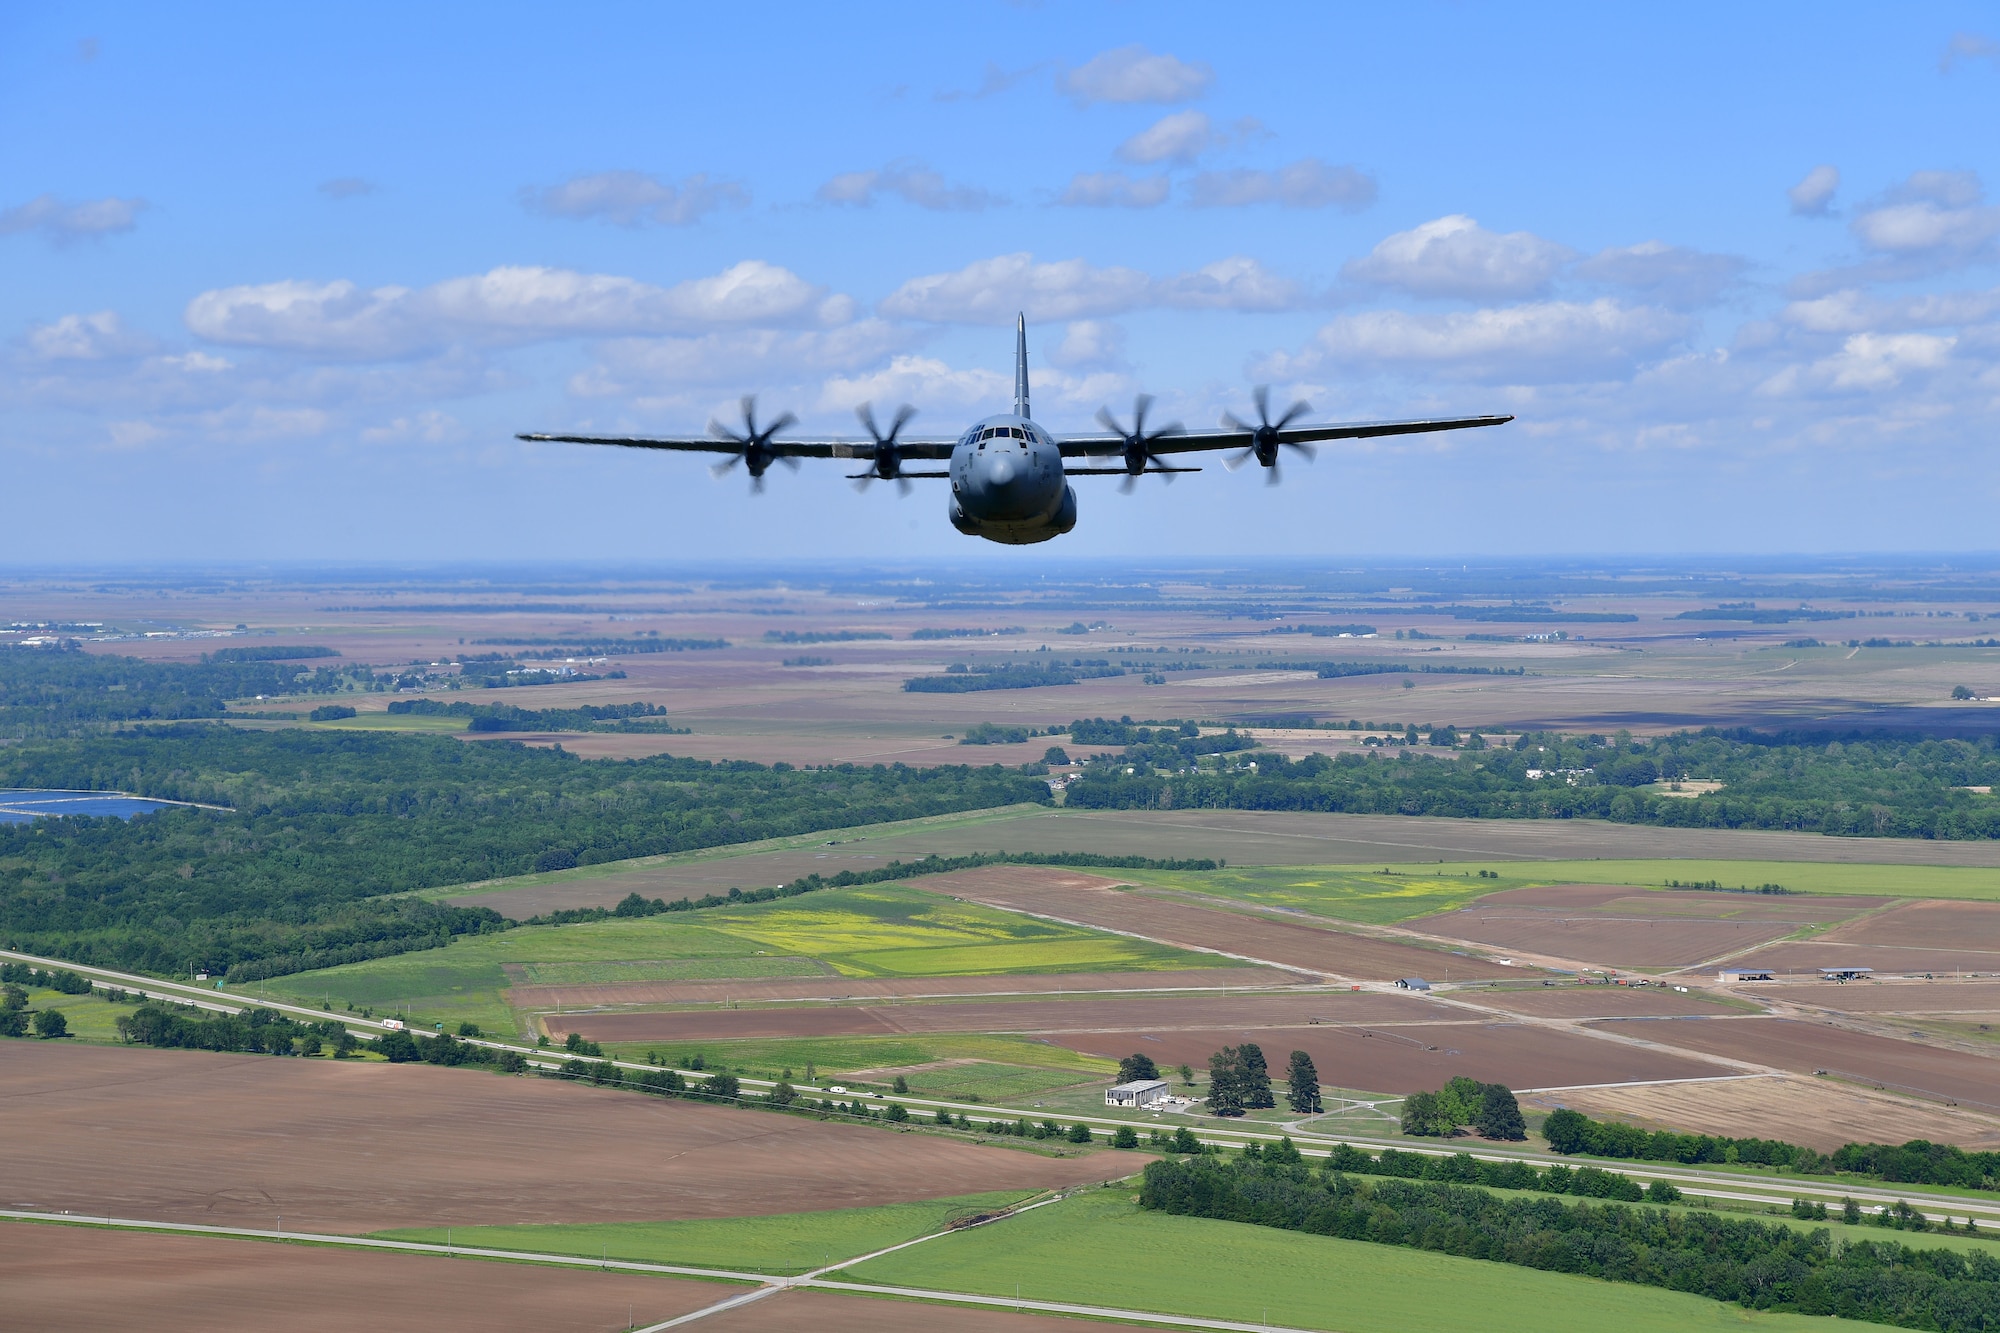 C-130s fly over the city of Little Rock Arkansas